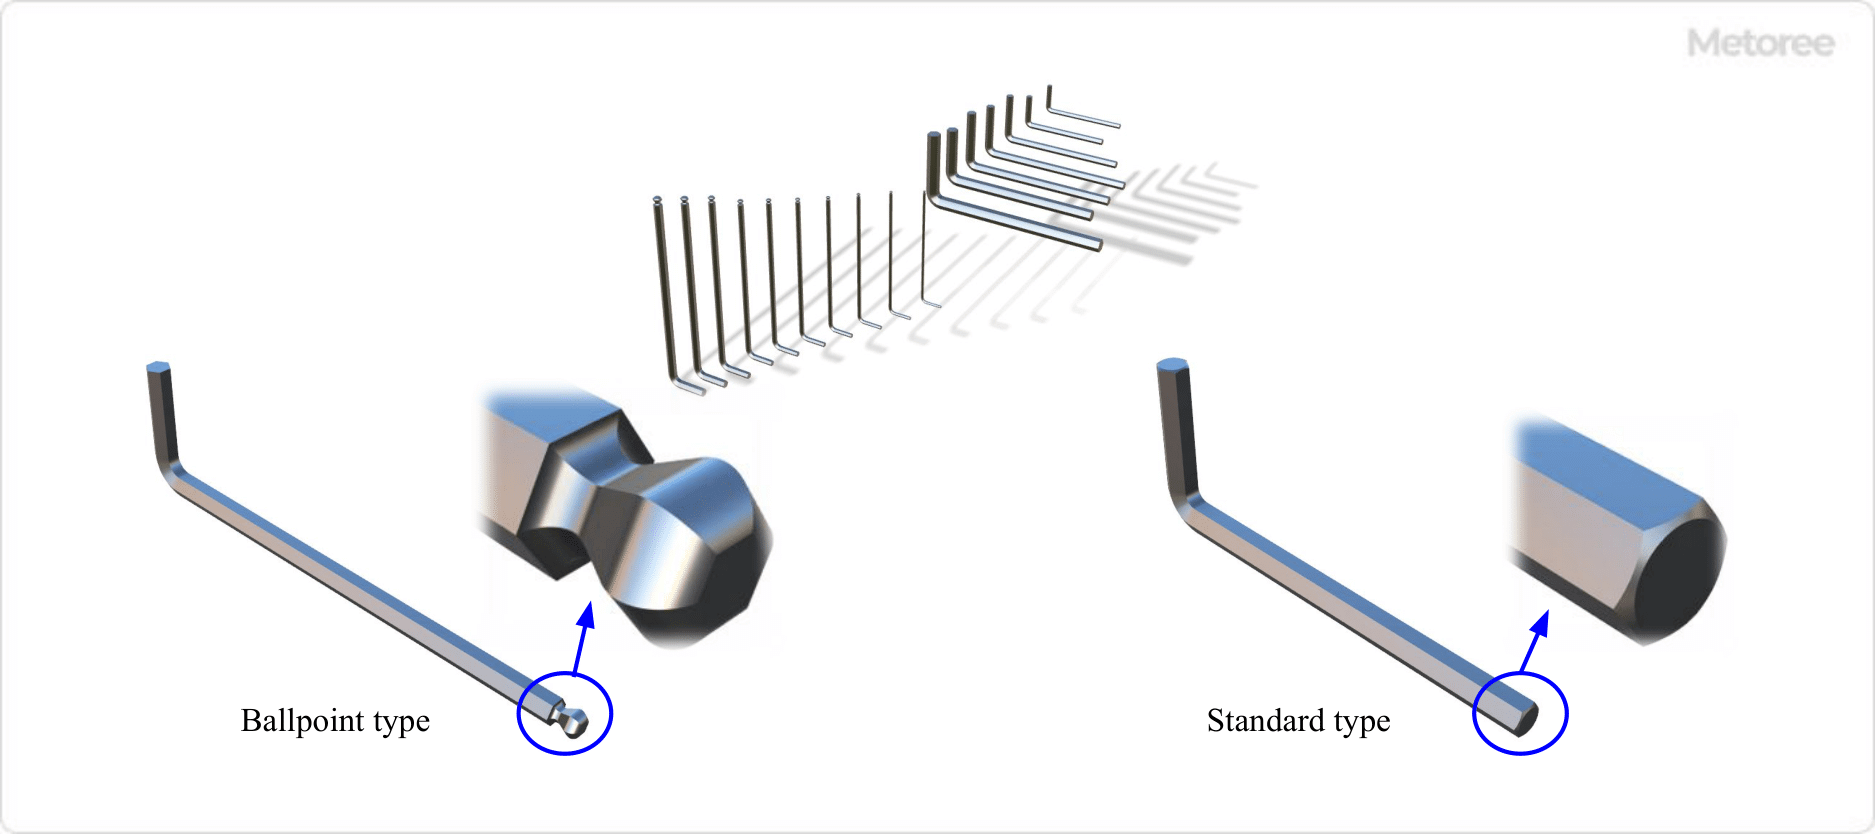 Figure 2. Tip shape of hexagonal bar wrench